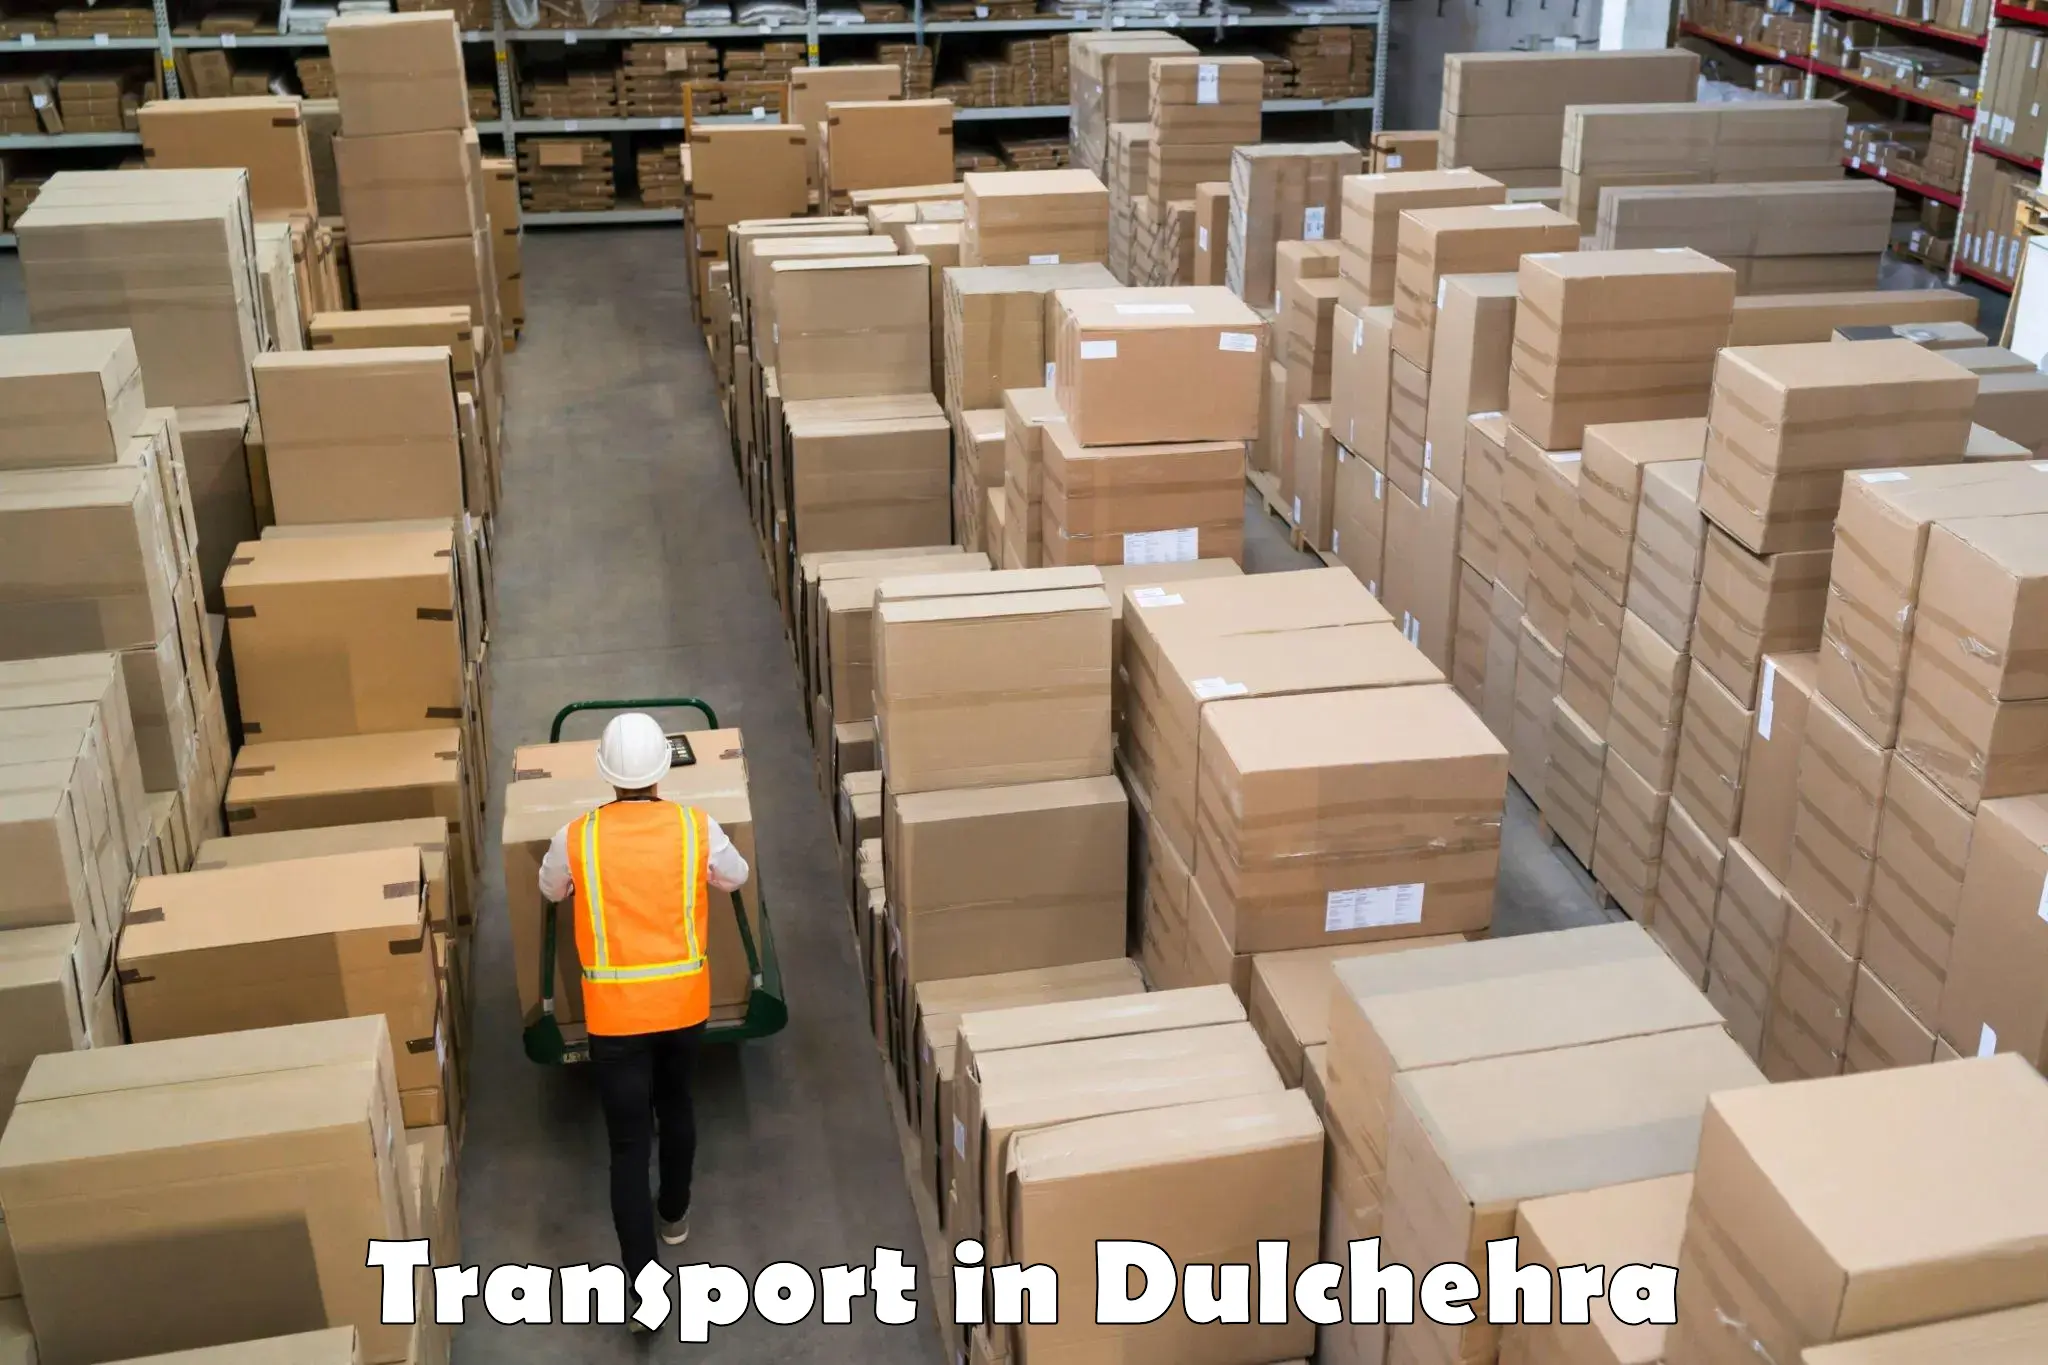 Delivery service in Dulchehra